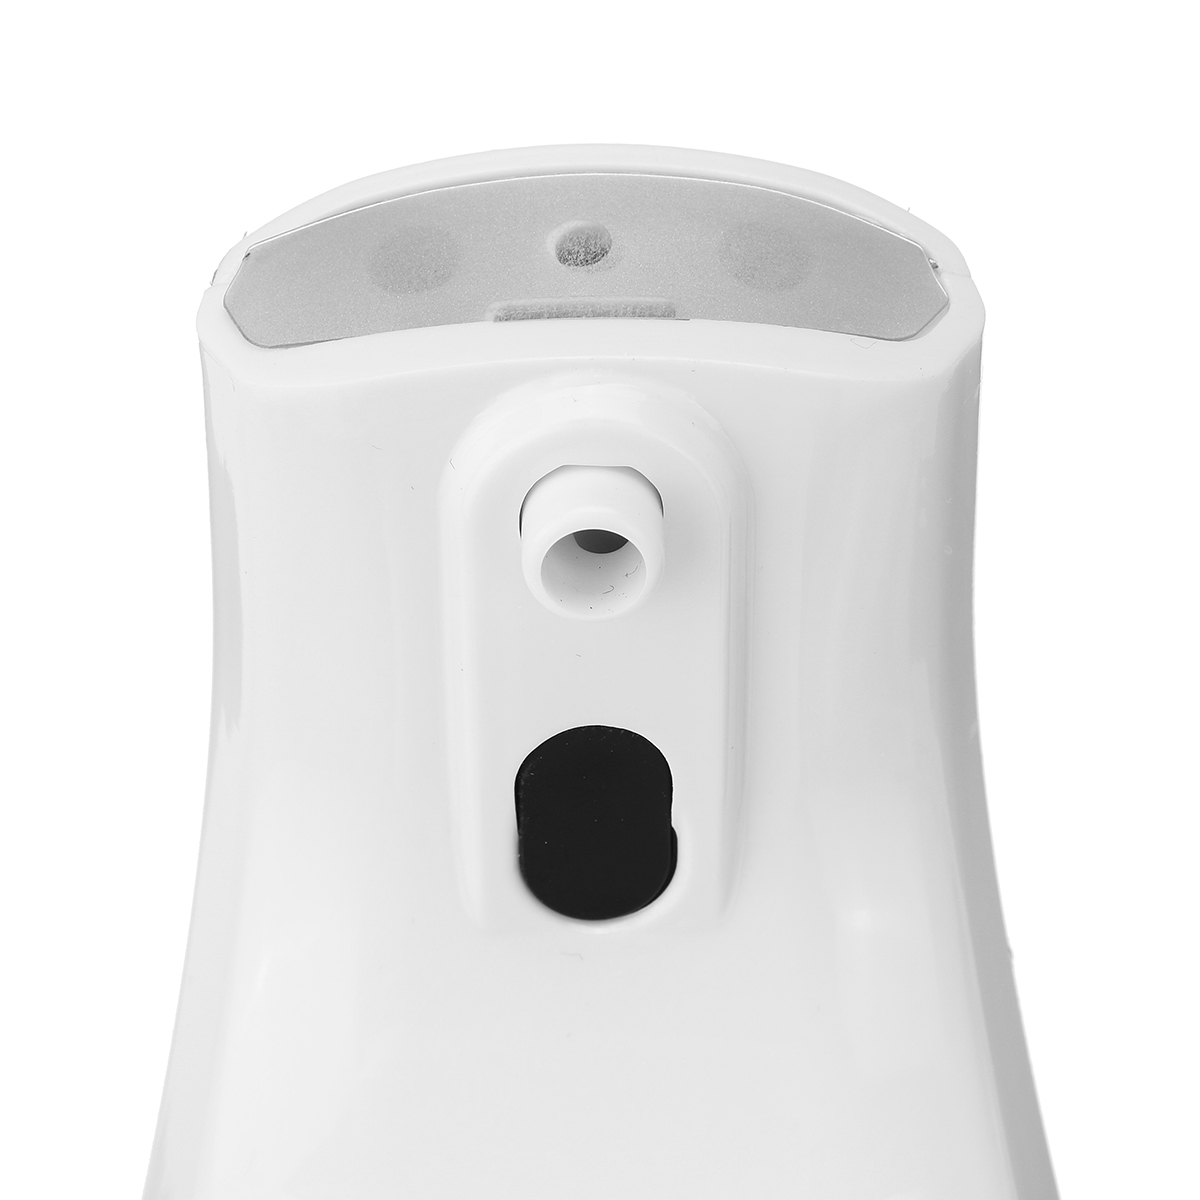 Find Auto Sensor Hand Dispenser Soap Gel Dispenser Foam Holder Hand Wash Bathroom for Sale on Gipsybee.com with cryptocurrencies